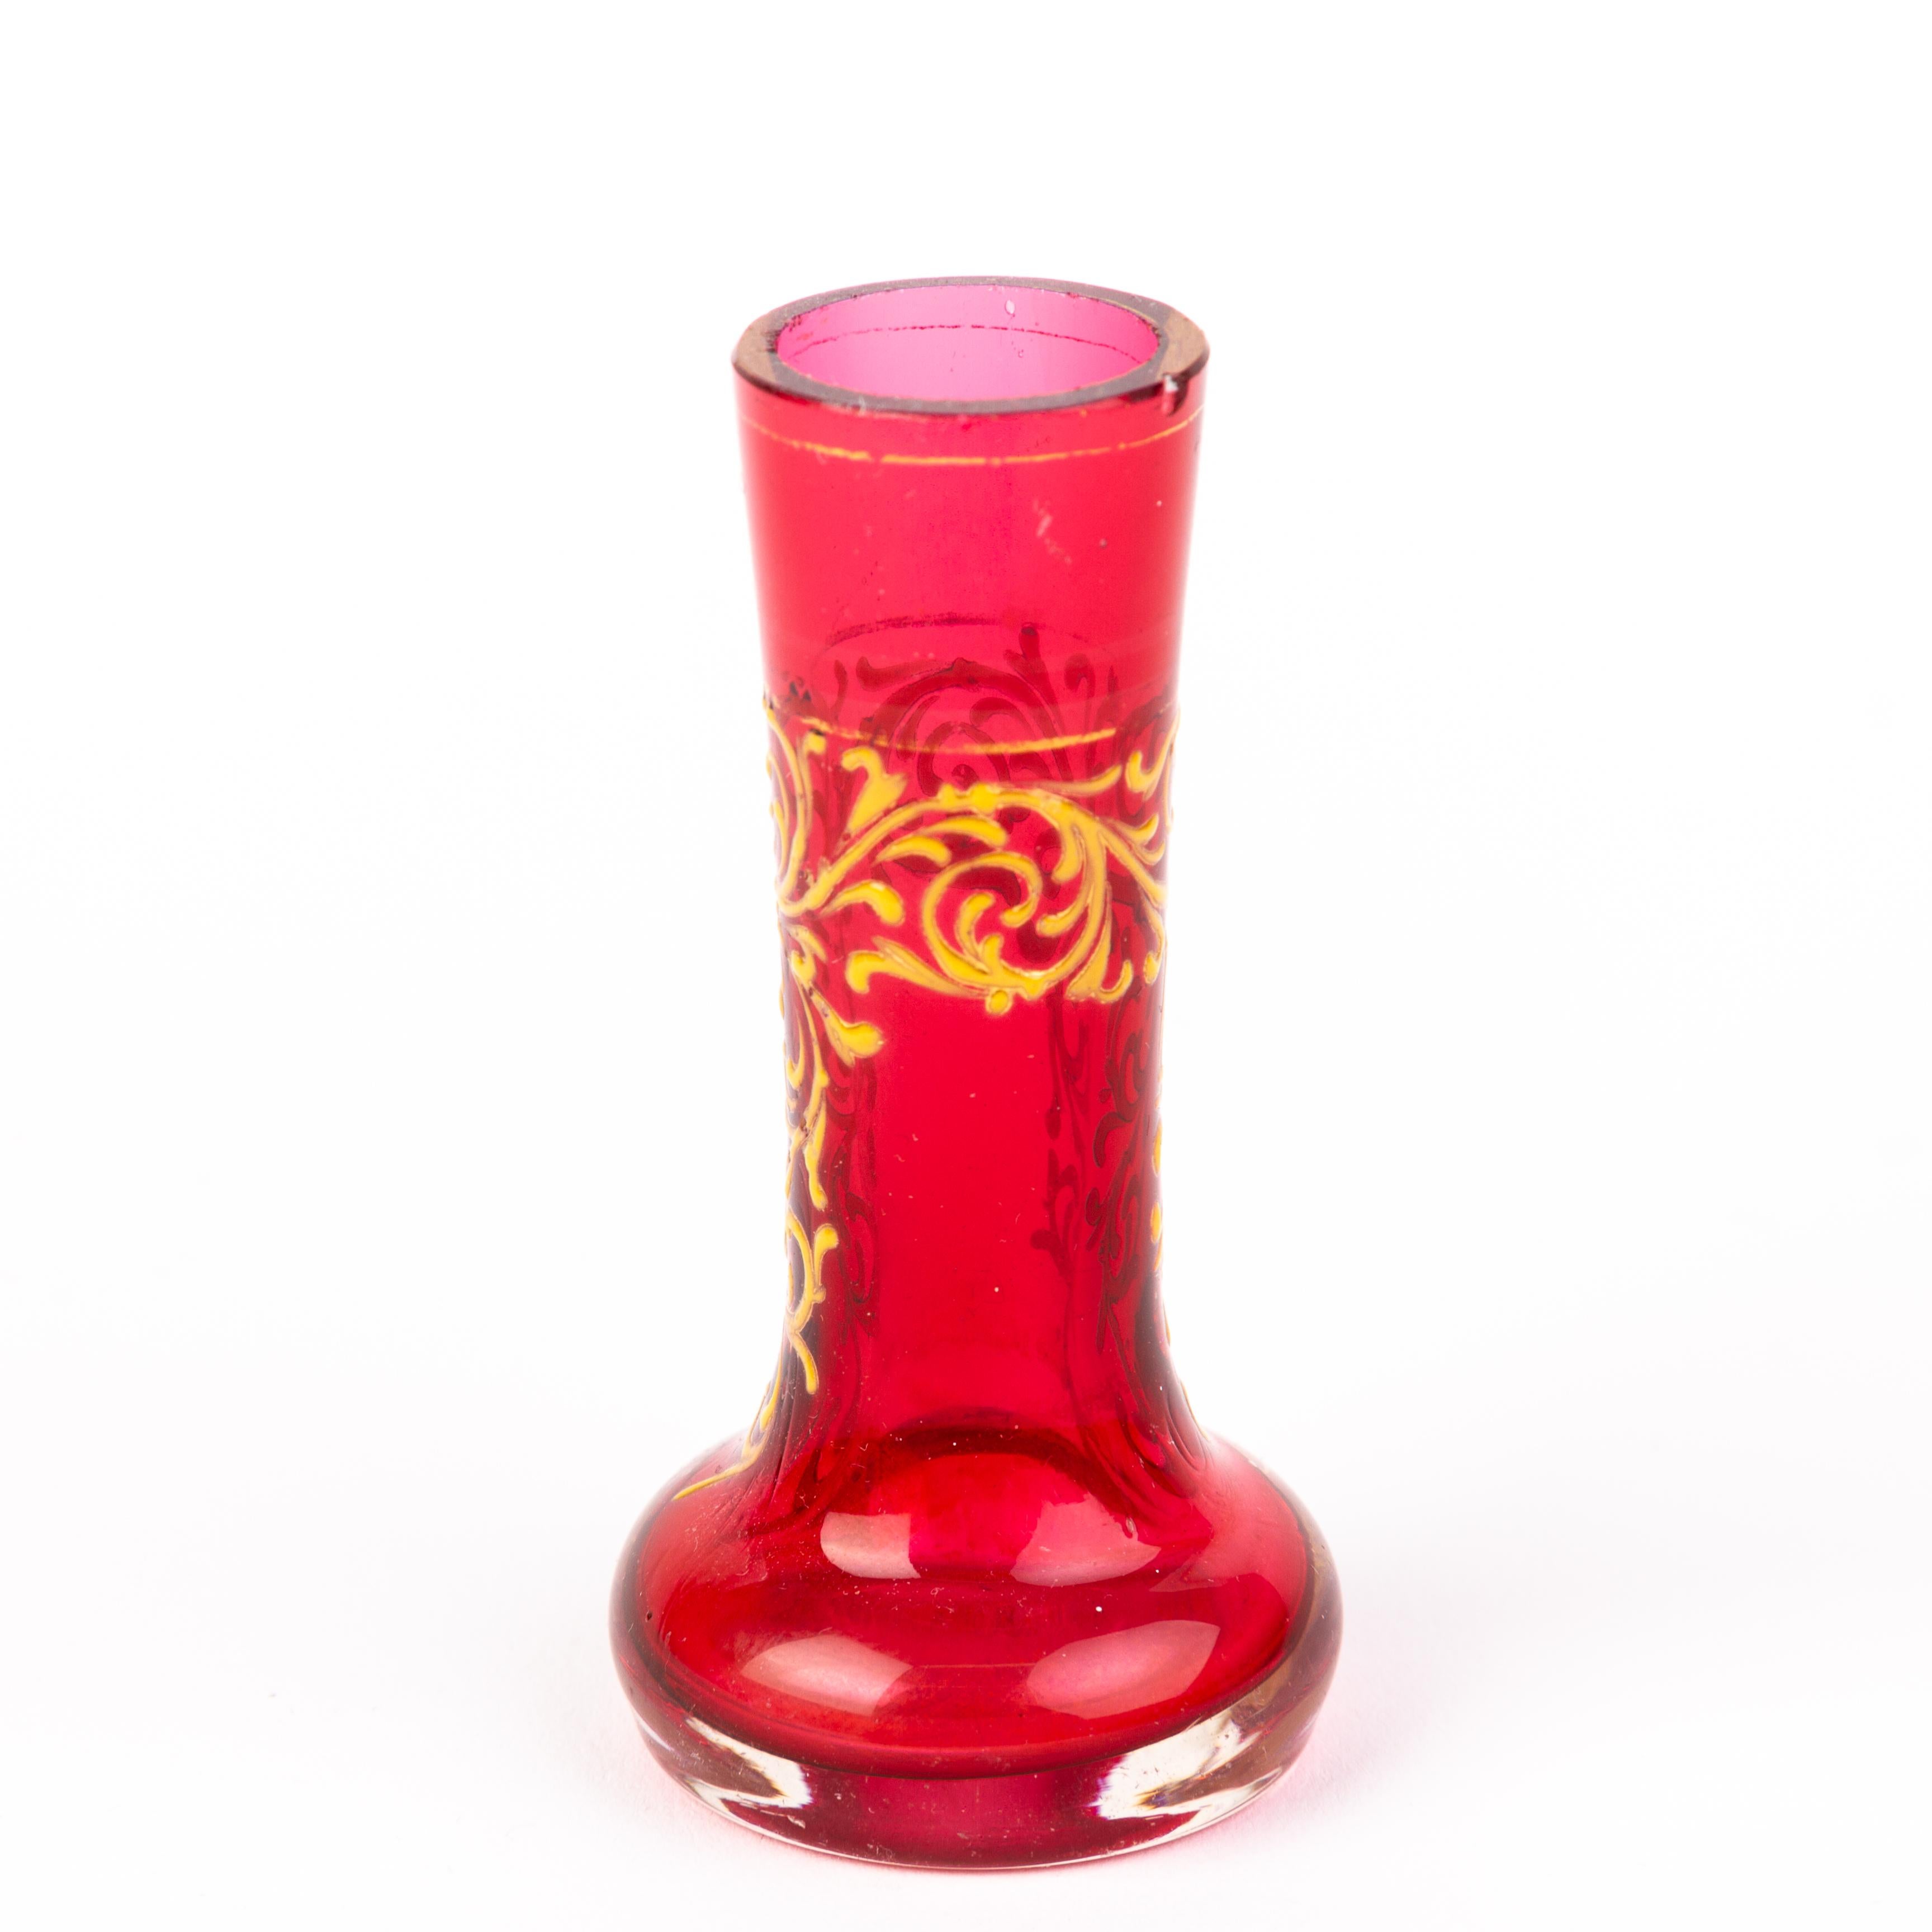 Venetian Enamel Ruby Glass Vase
Good condition
Free international shipping.